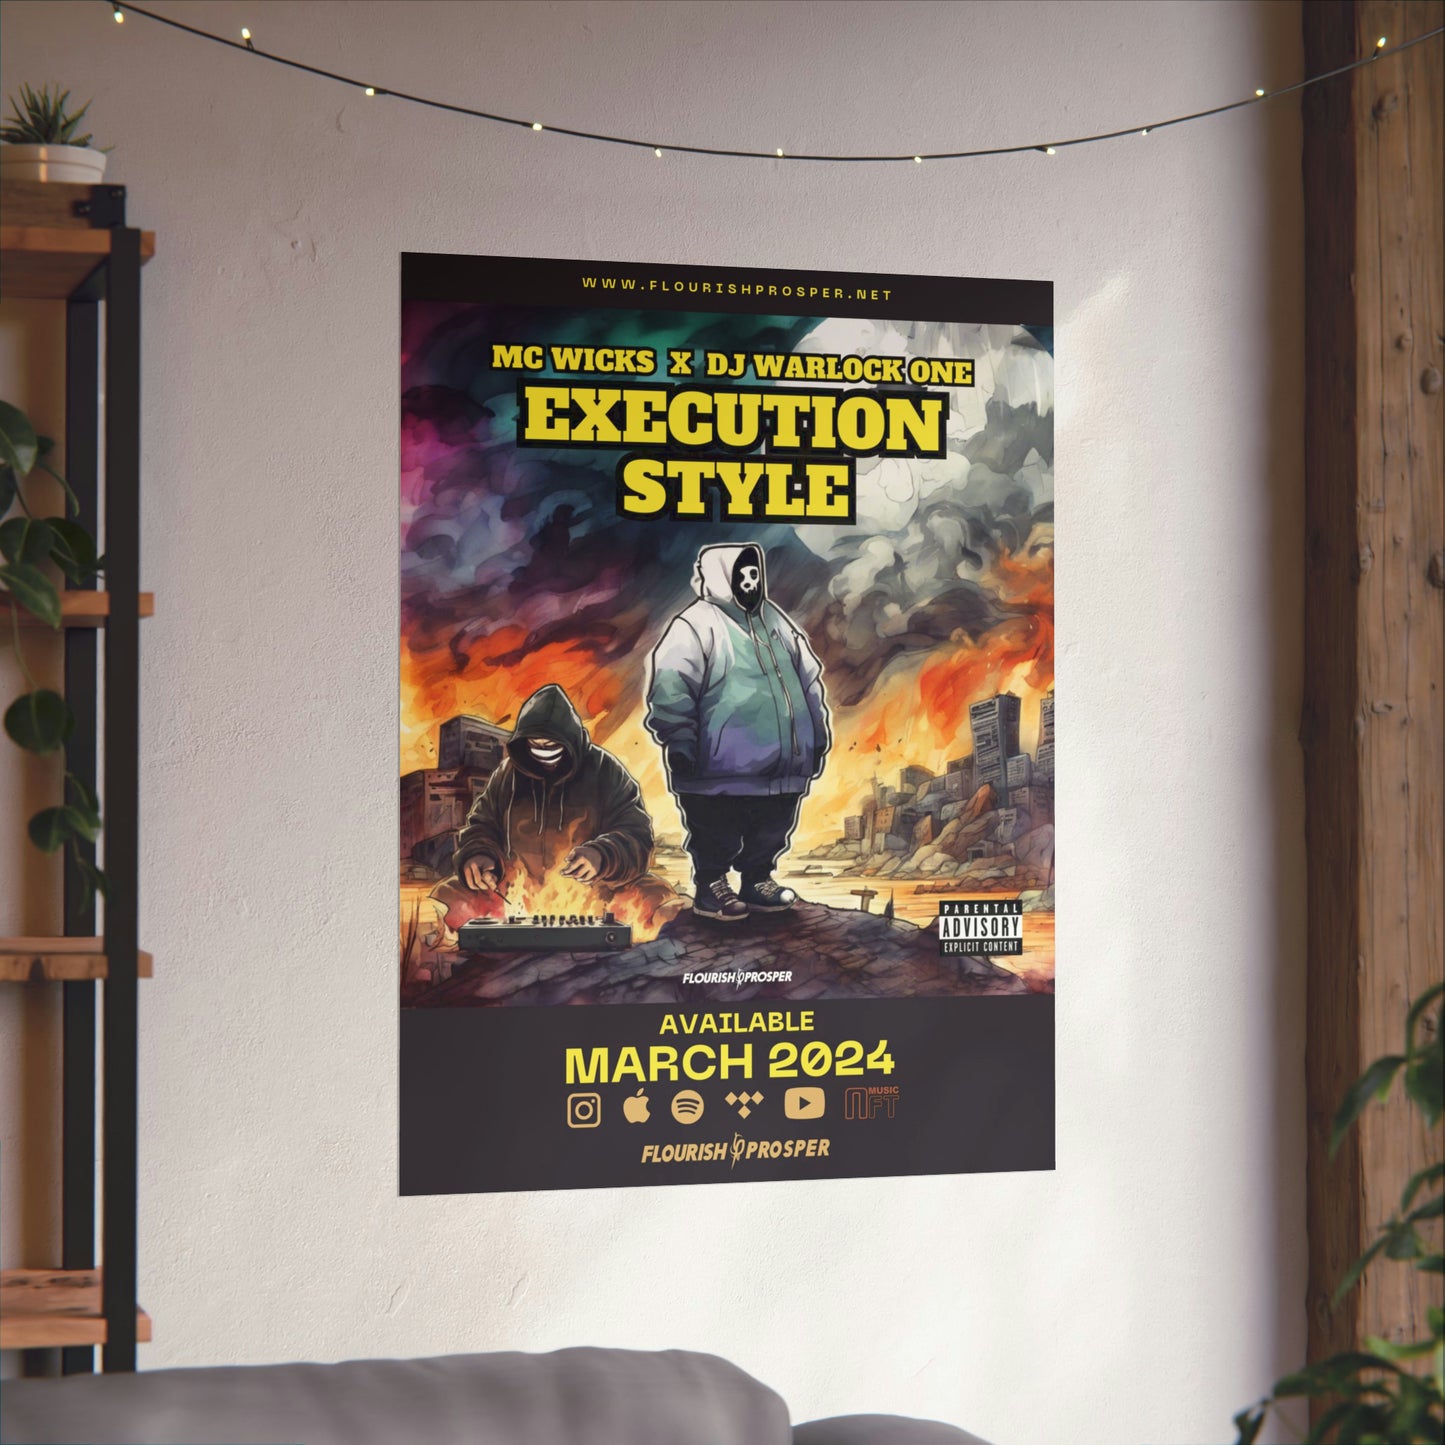 MC Wicks & DJ Warlock One "Execution Style" Matte Vertical Posters